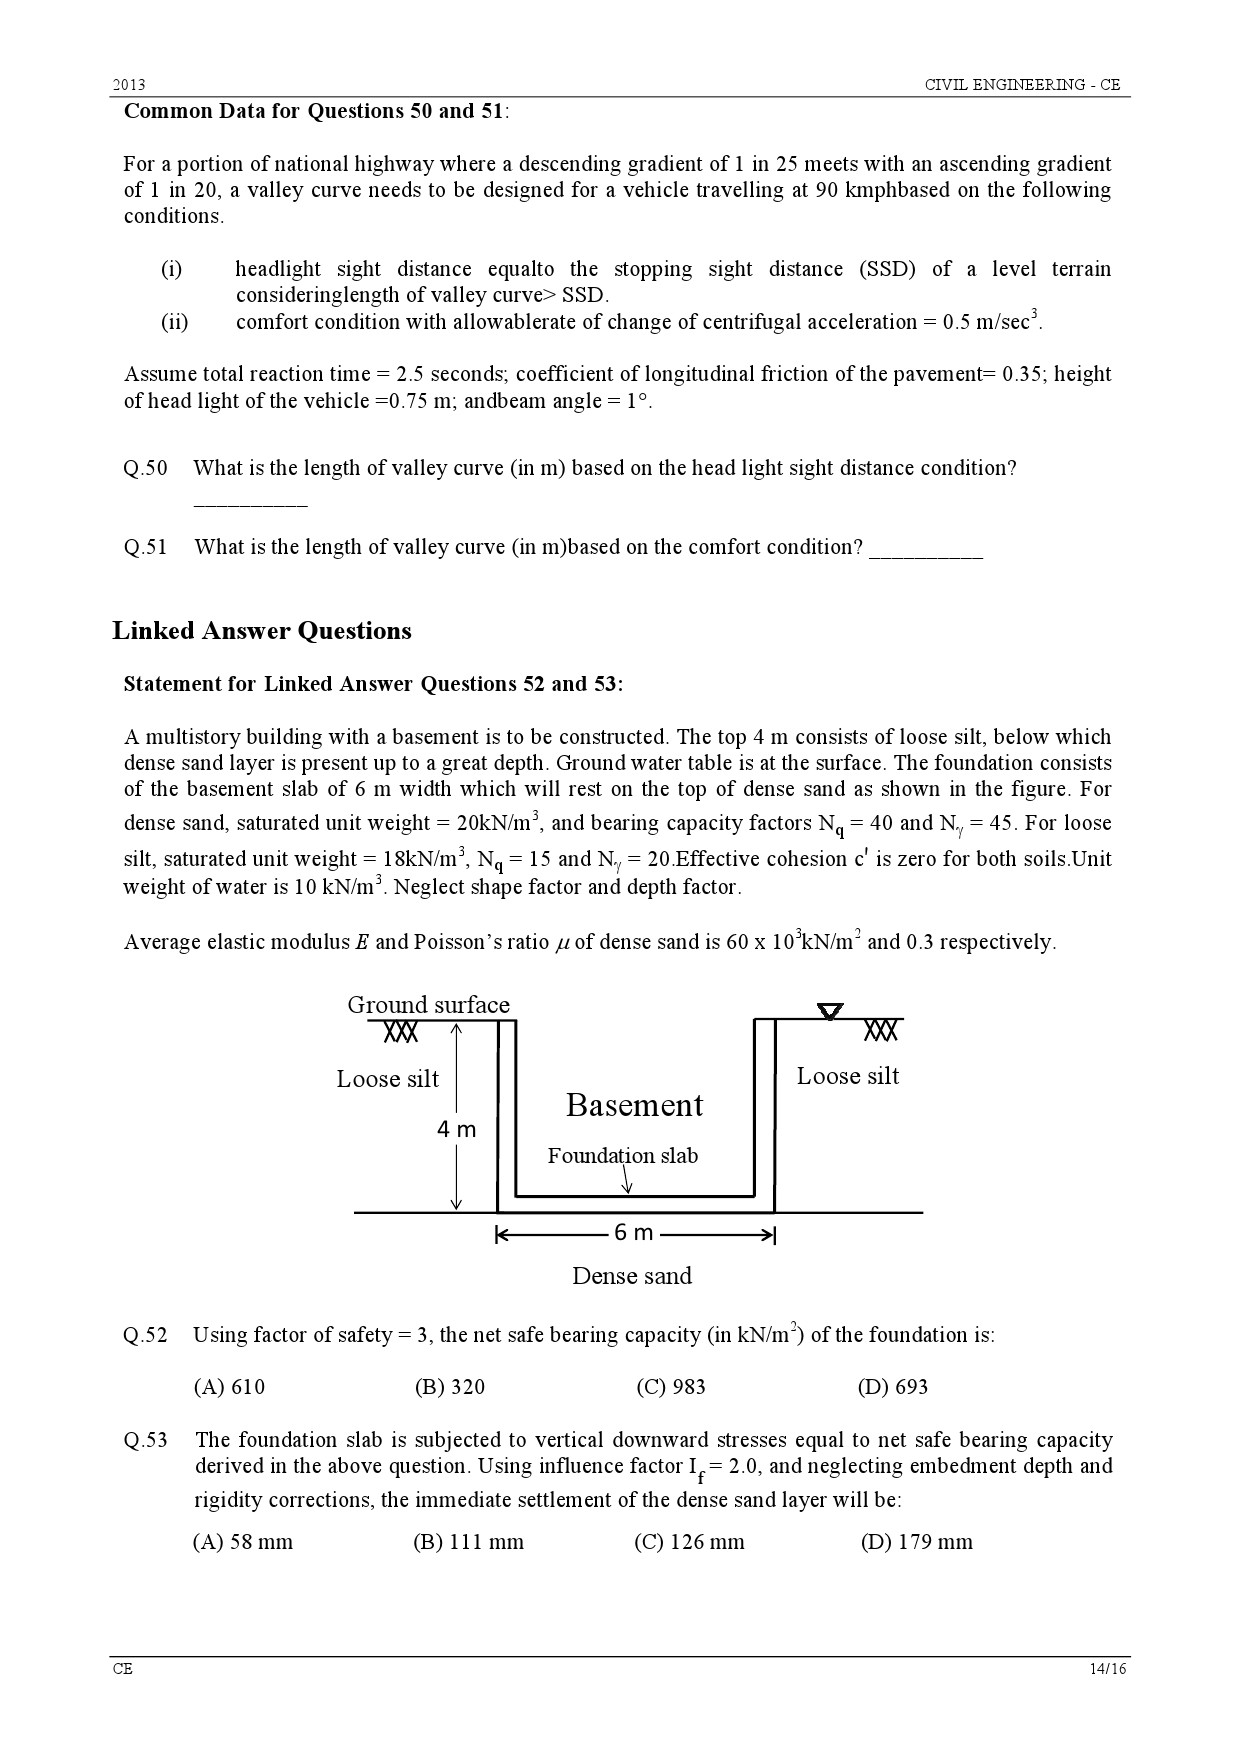 GATE Exam Question Paper 2013 Civil Engineering 14